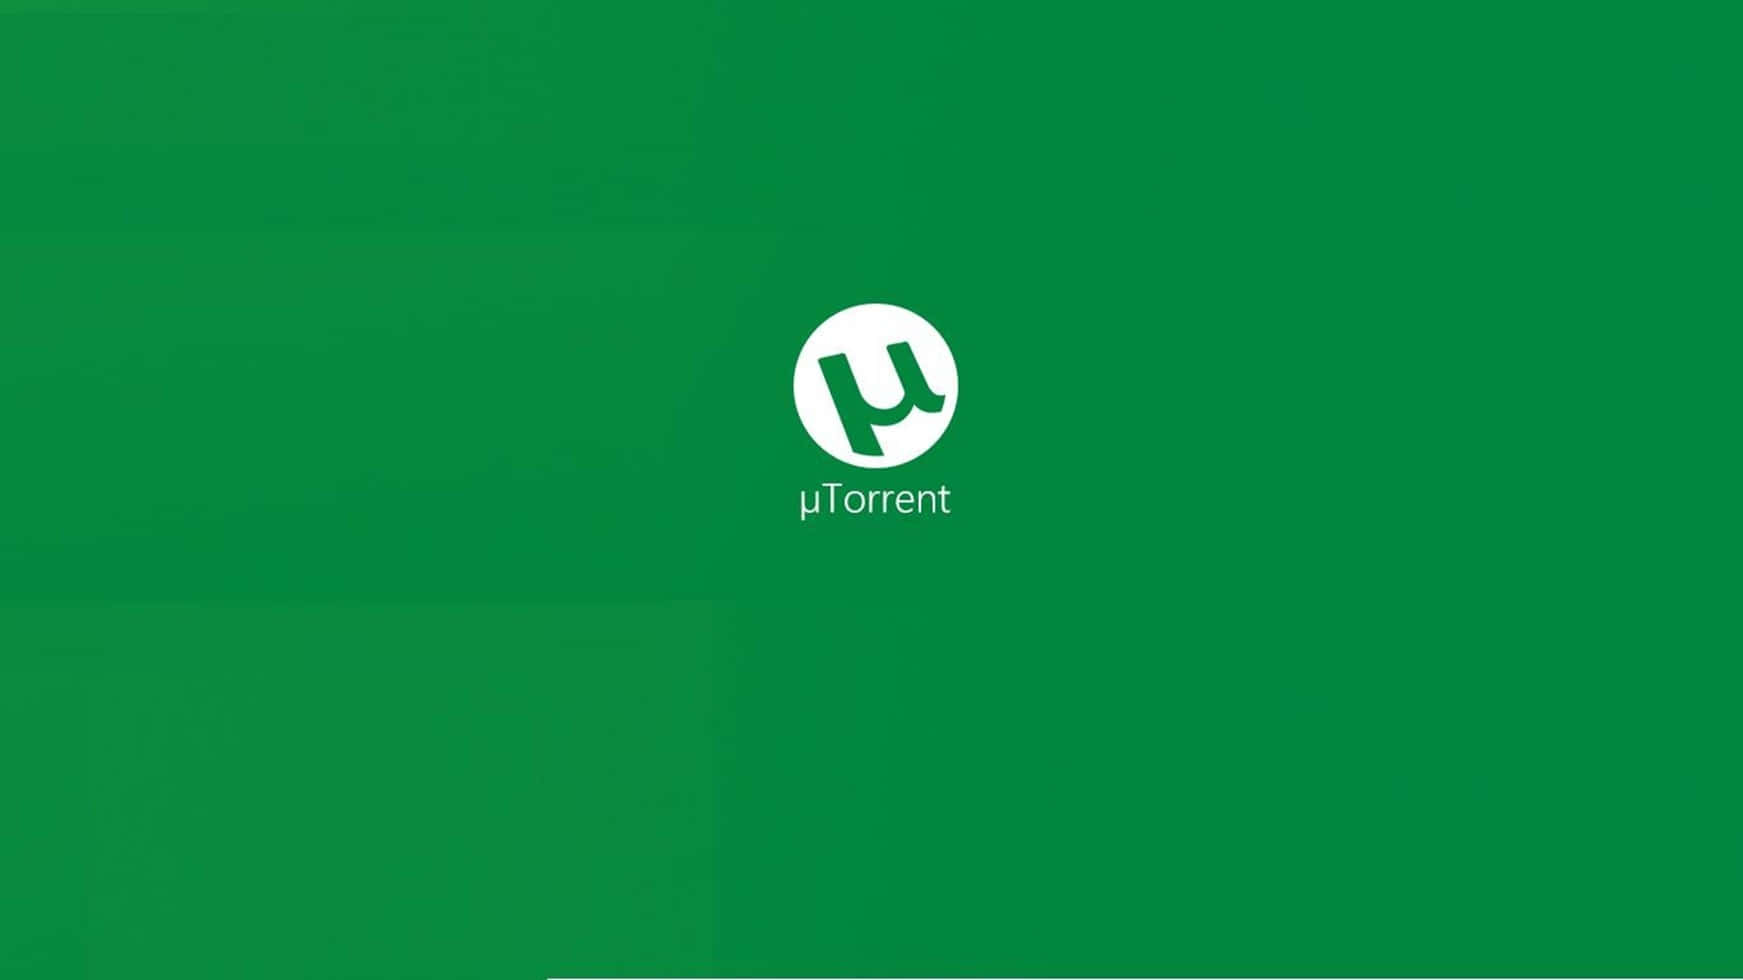 Torrent Logo Green Background Wallpaper